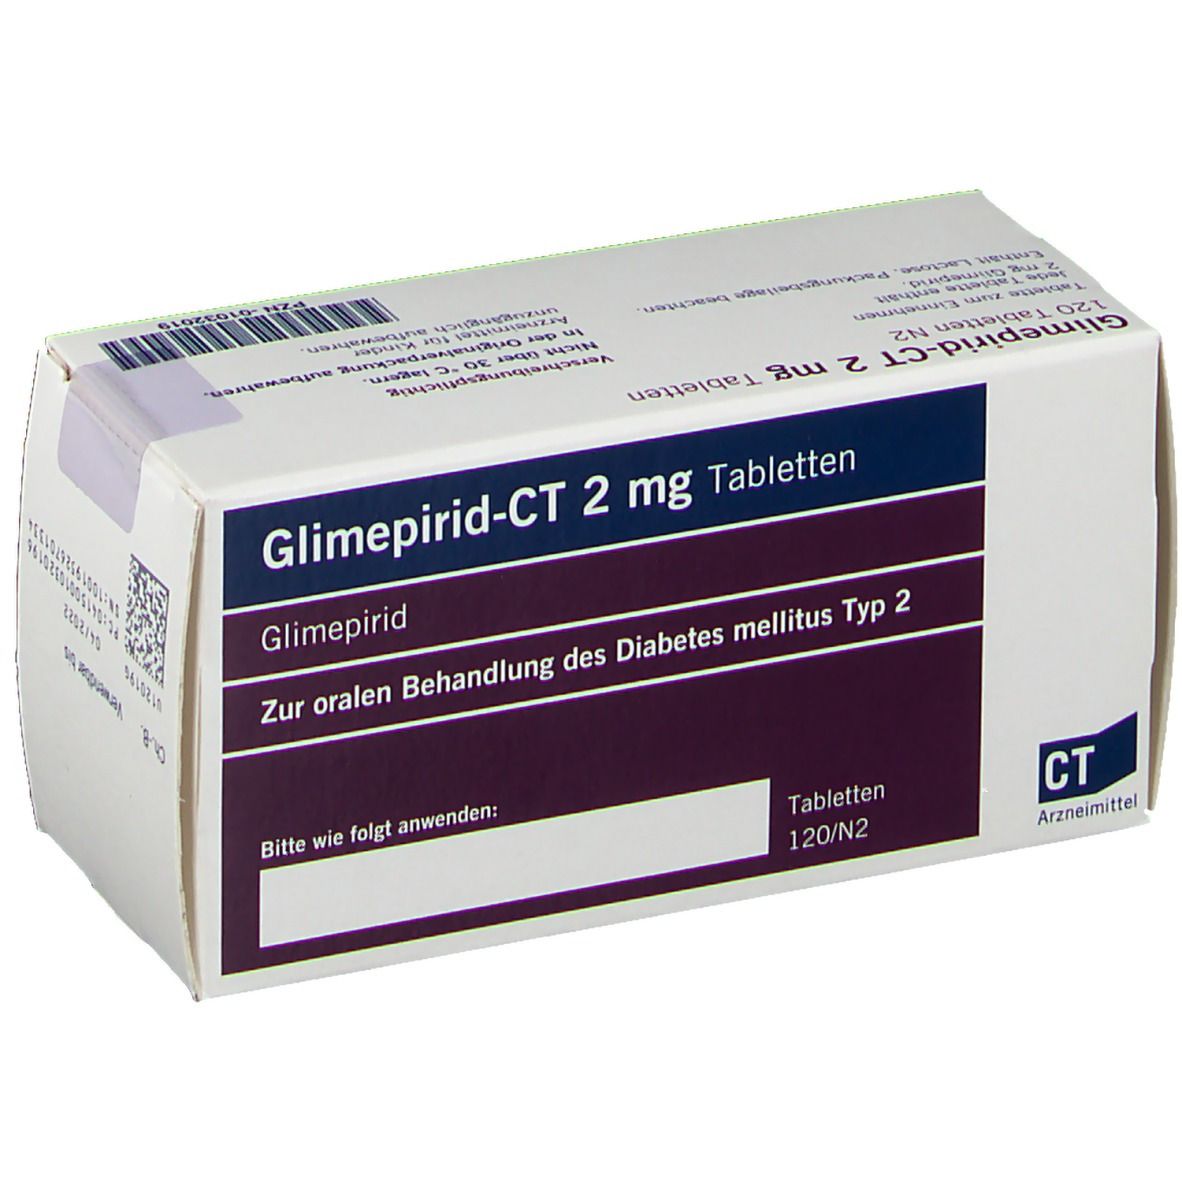 Glimepirid-CT 2 mg